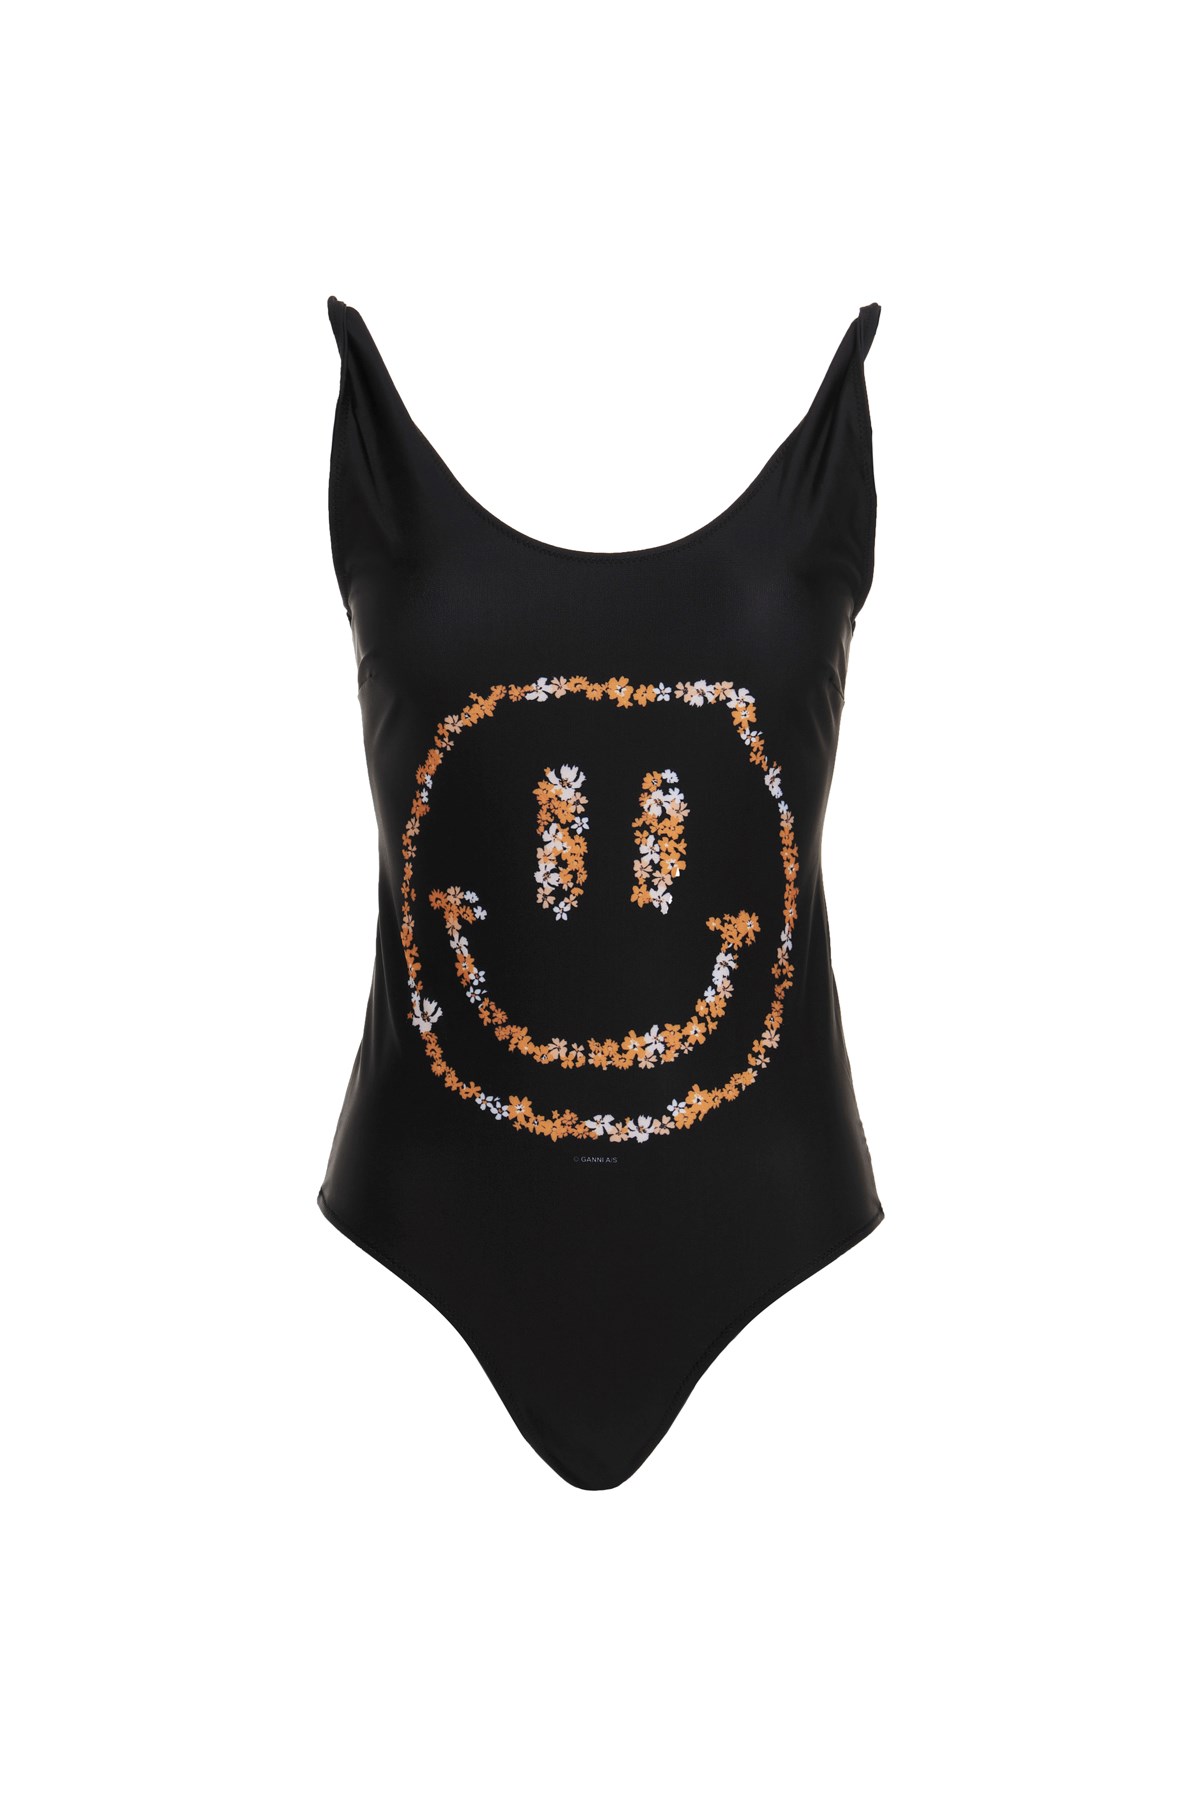 GANNI ‘Smile’ Printed Swimsuit